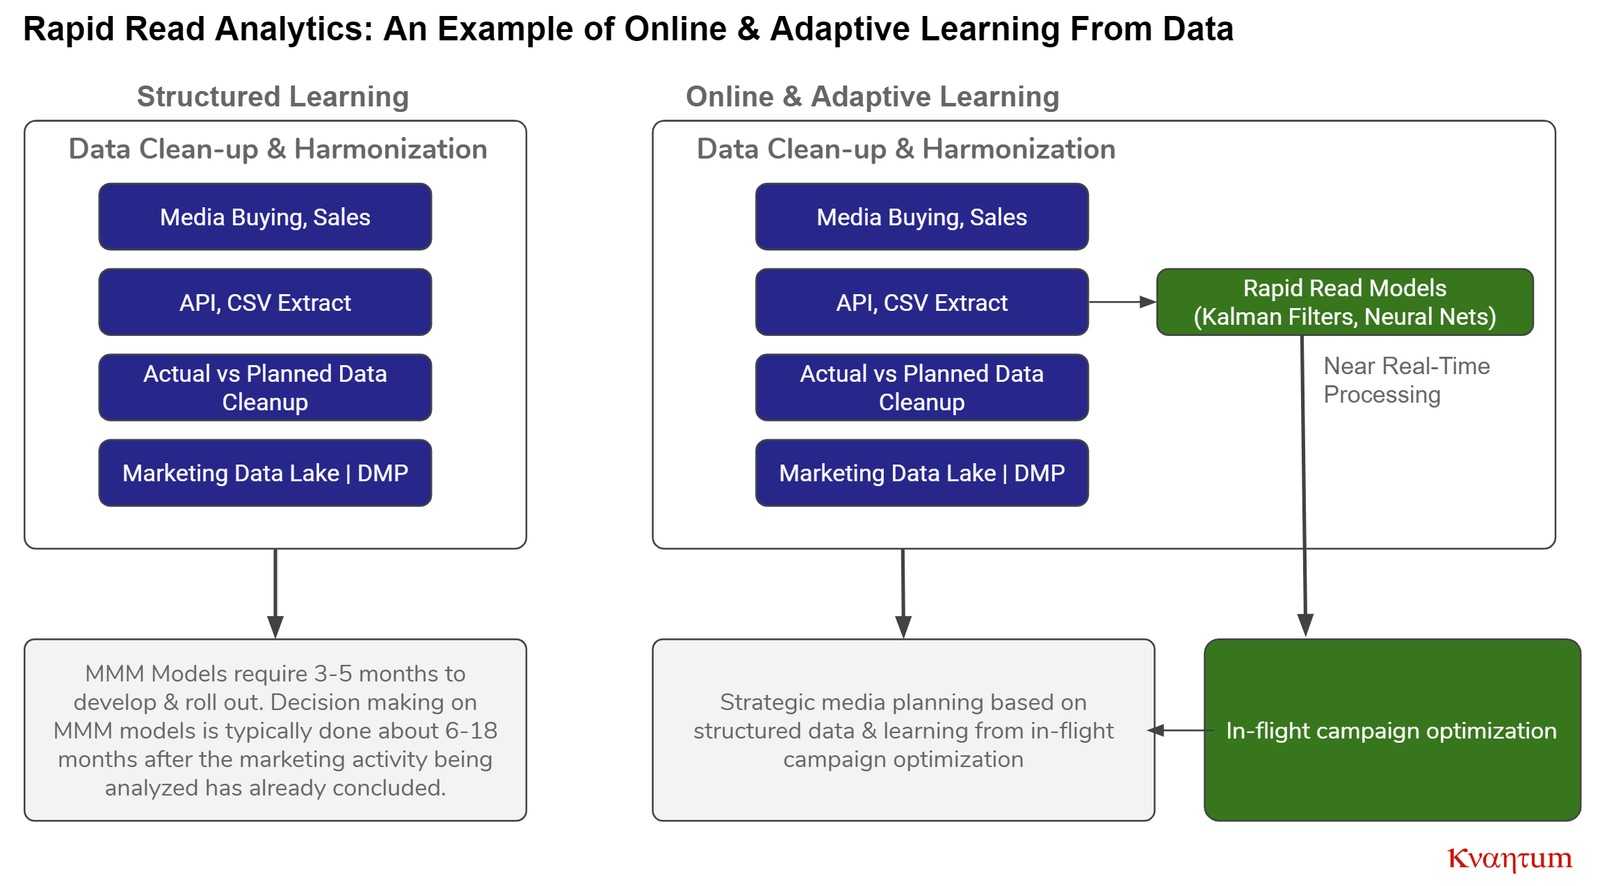 kvantum online adaptive learning example